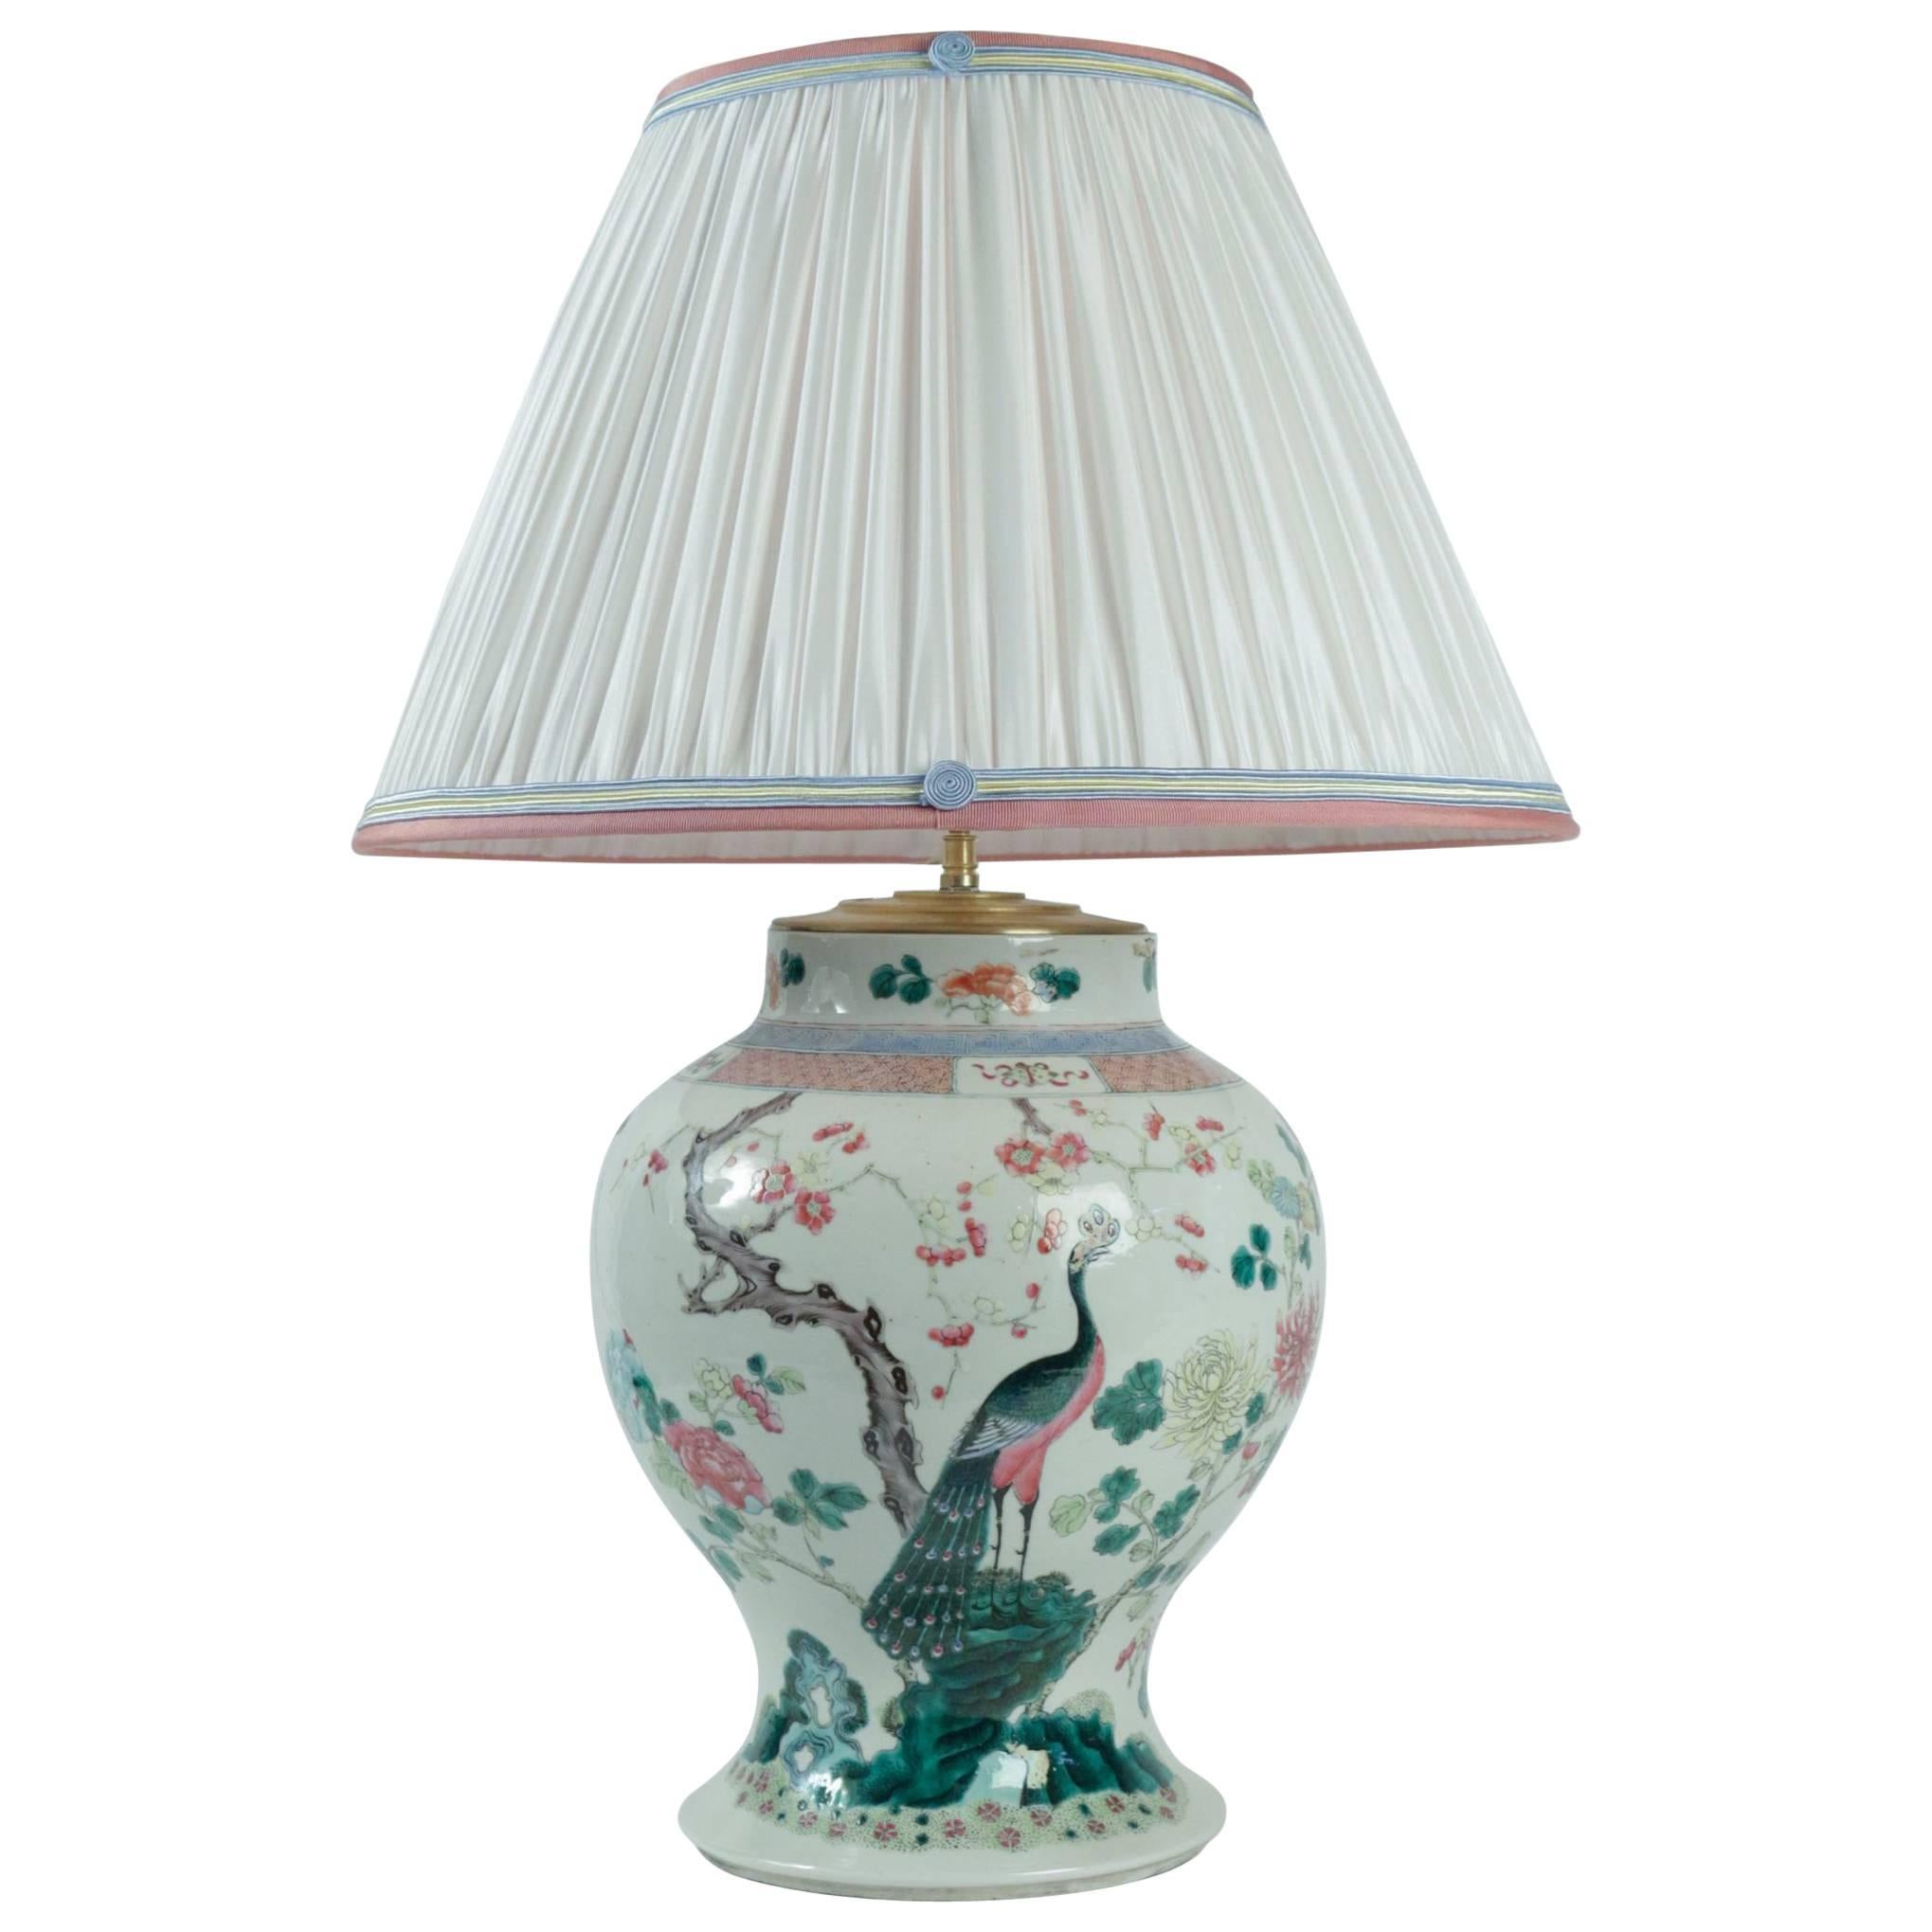 Late 19th Century Chinese Covered Jar Lamp, circa 1880